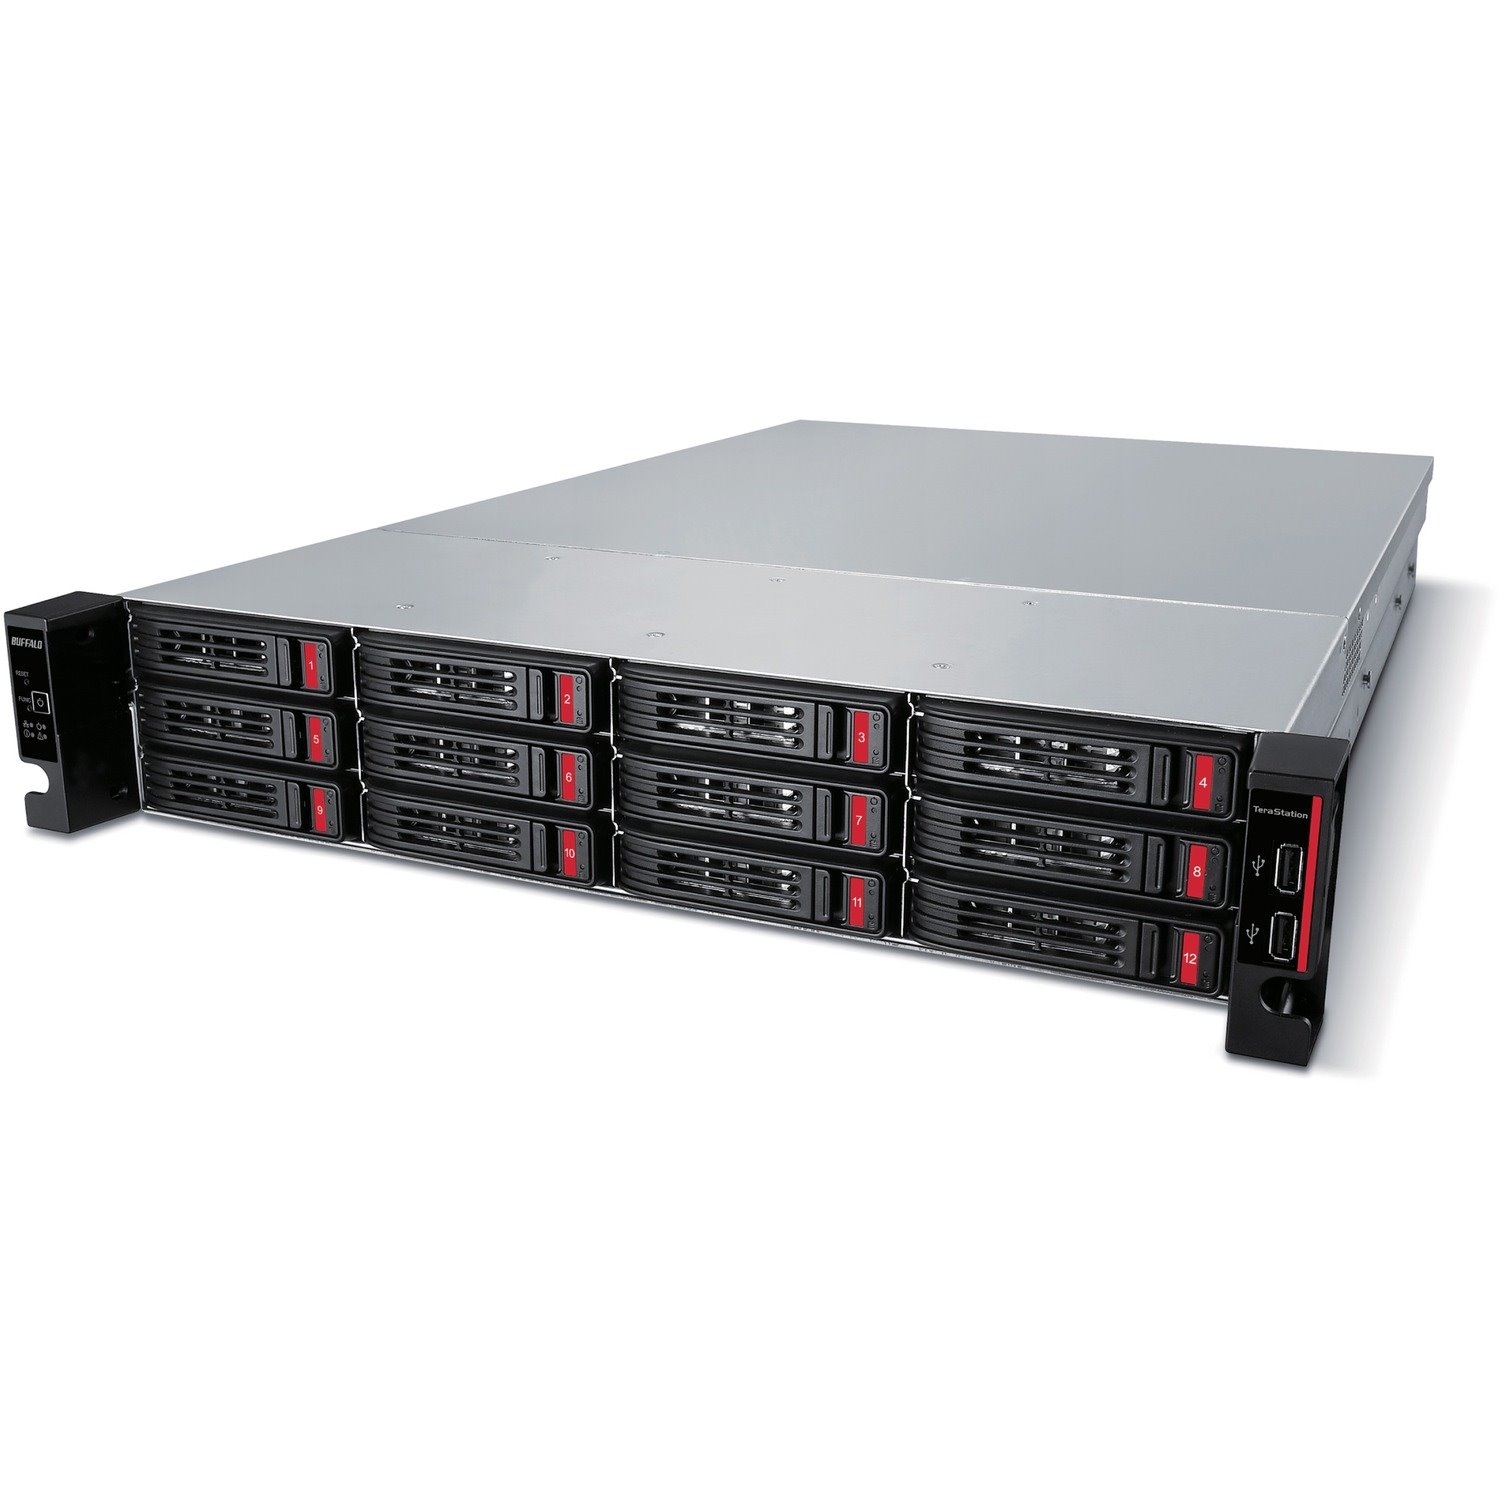 BUFFALO TeraStation 51220 12-Bay 240TB (12x20TB) Business Rackmount NAS Storage Hard Drives Included